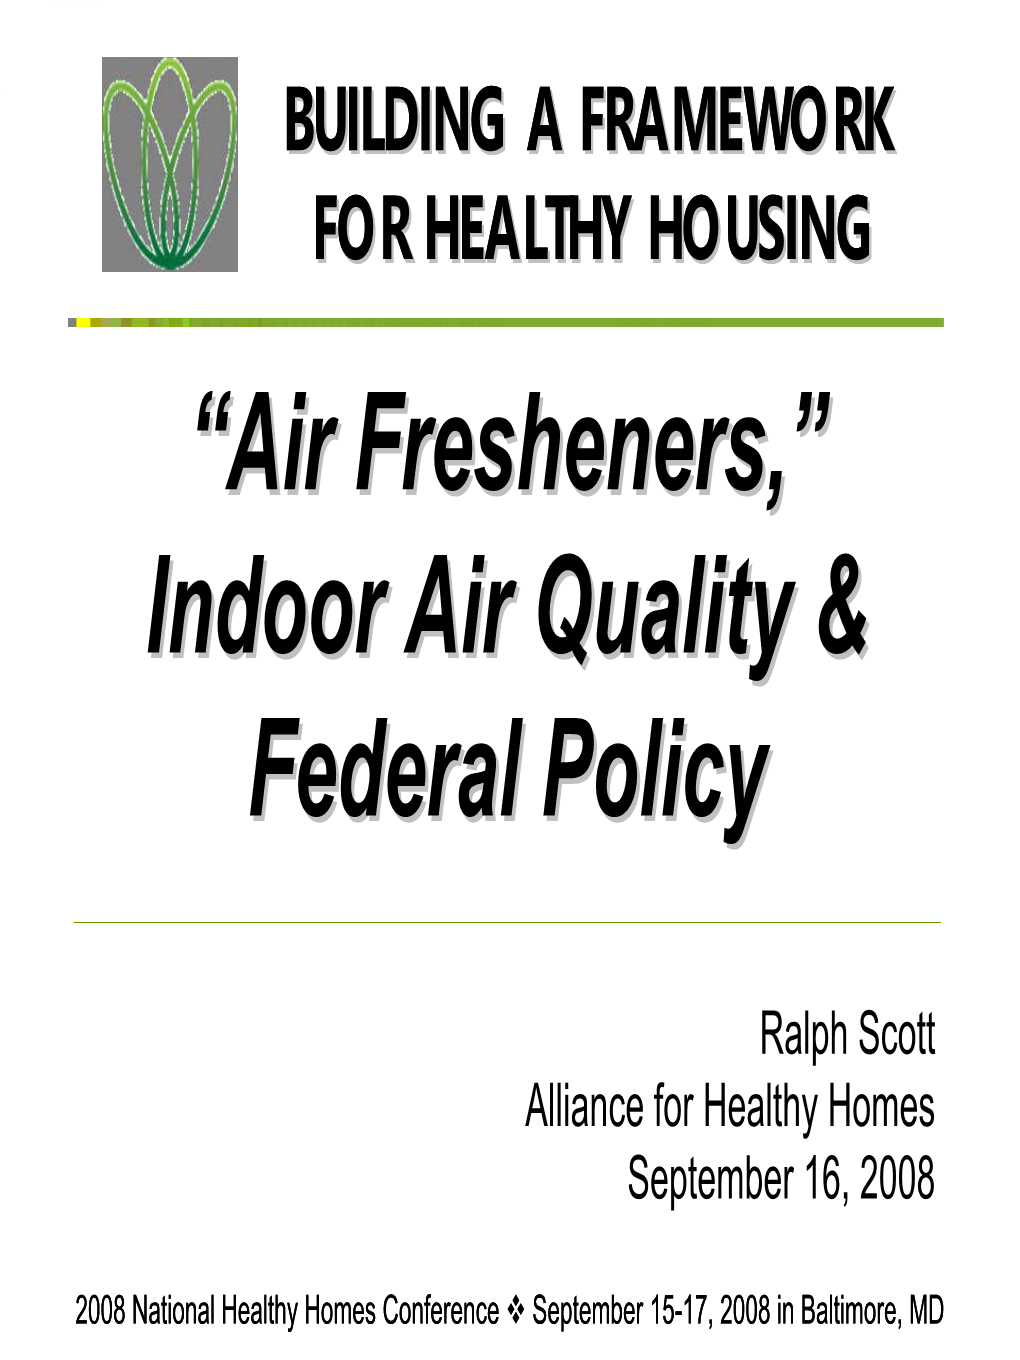 Air Fresheners,Fresheners,”” Indoorindoor Airair Qualityquality && Federalfederal Policypolicy